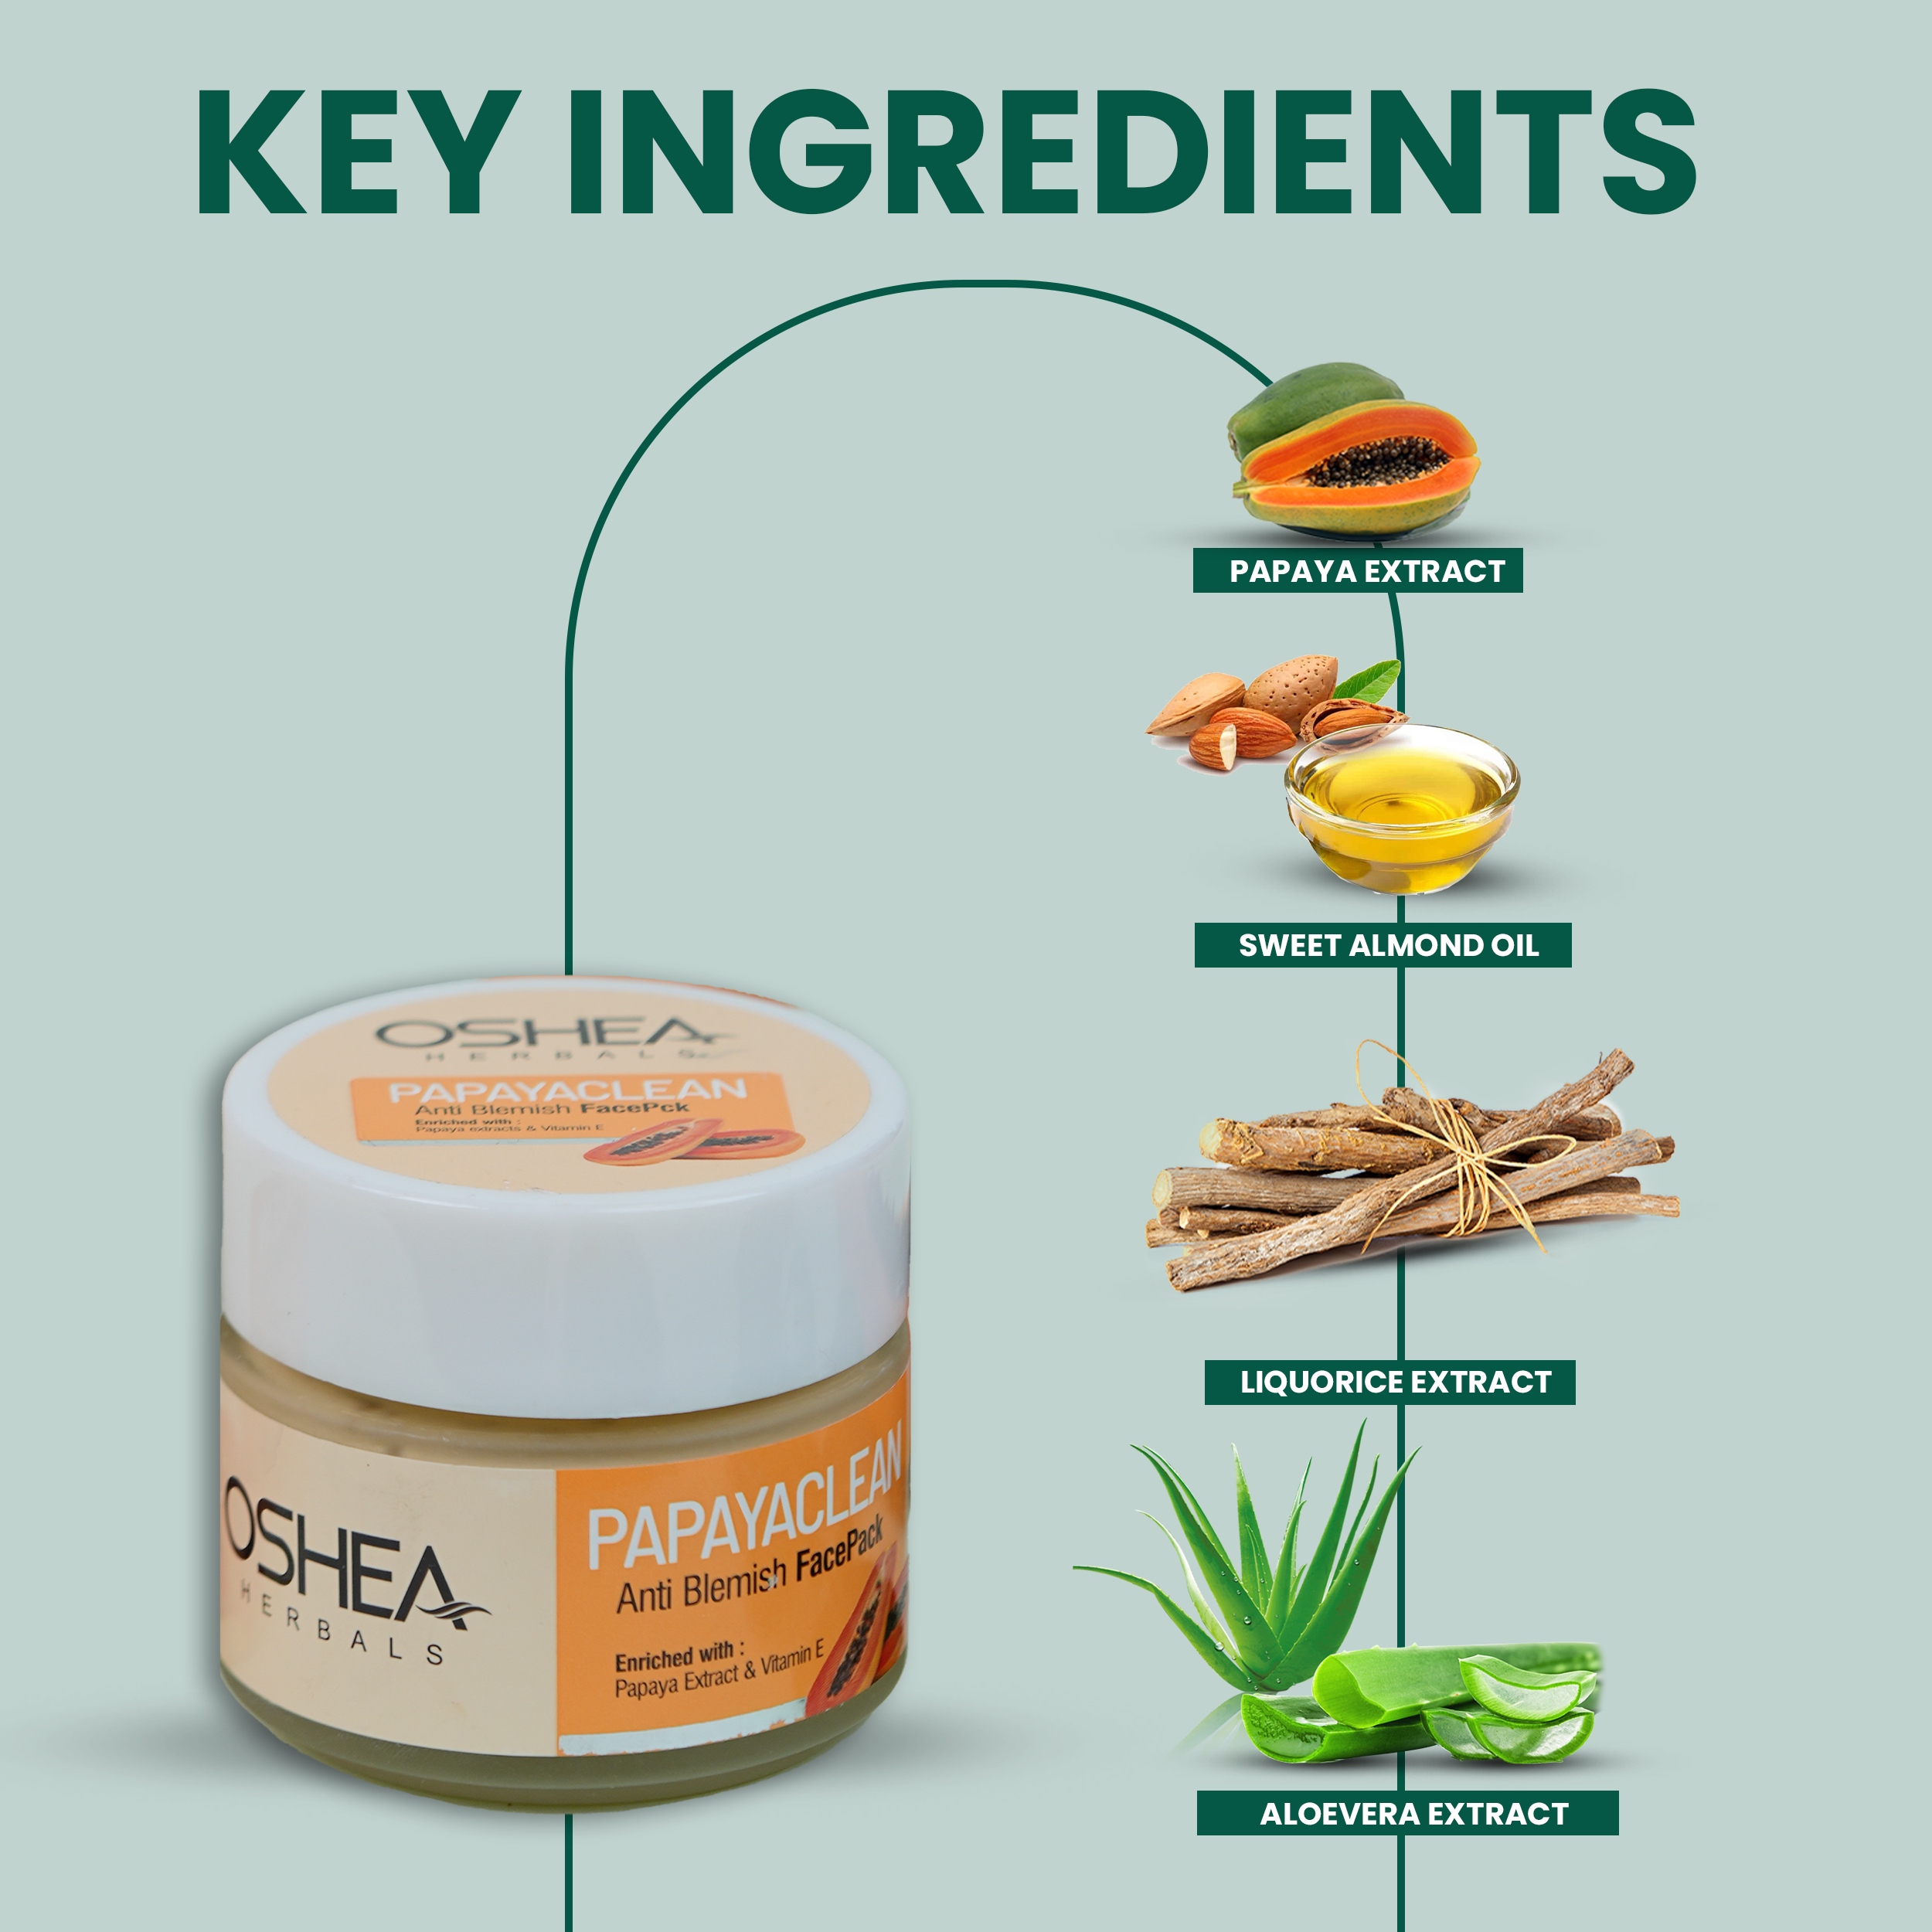 key ingredients Papayaclean Anti Blemishes Face pack Oshea Herbals